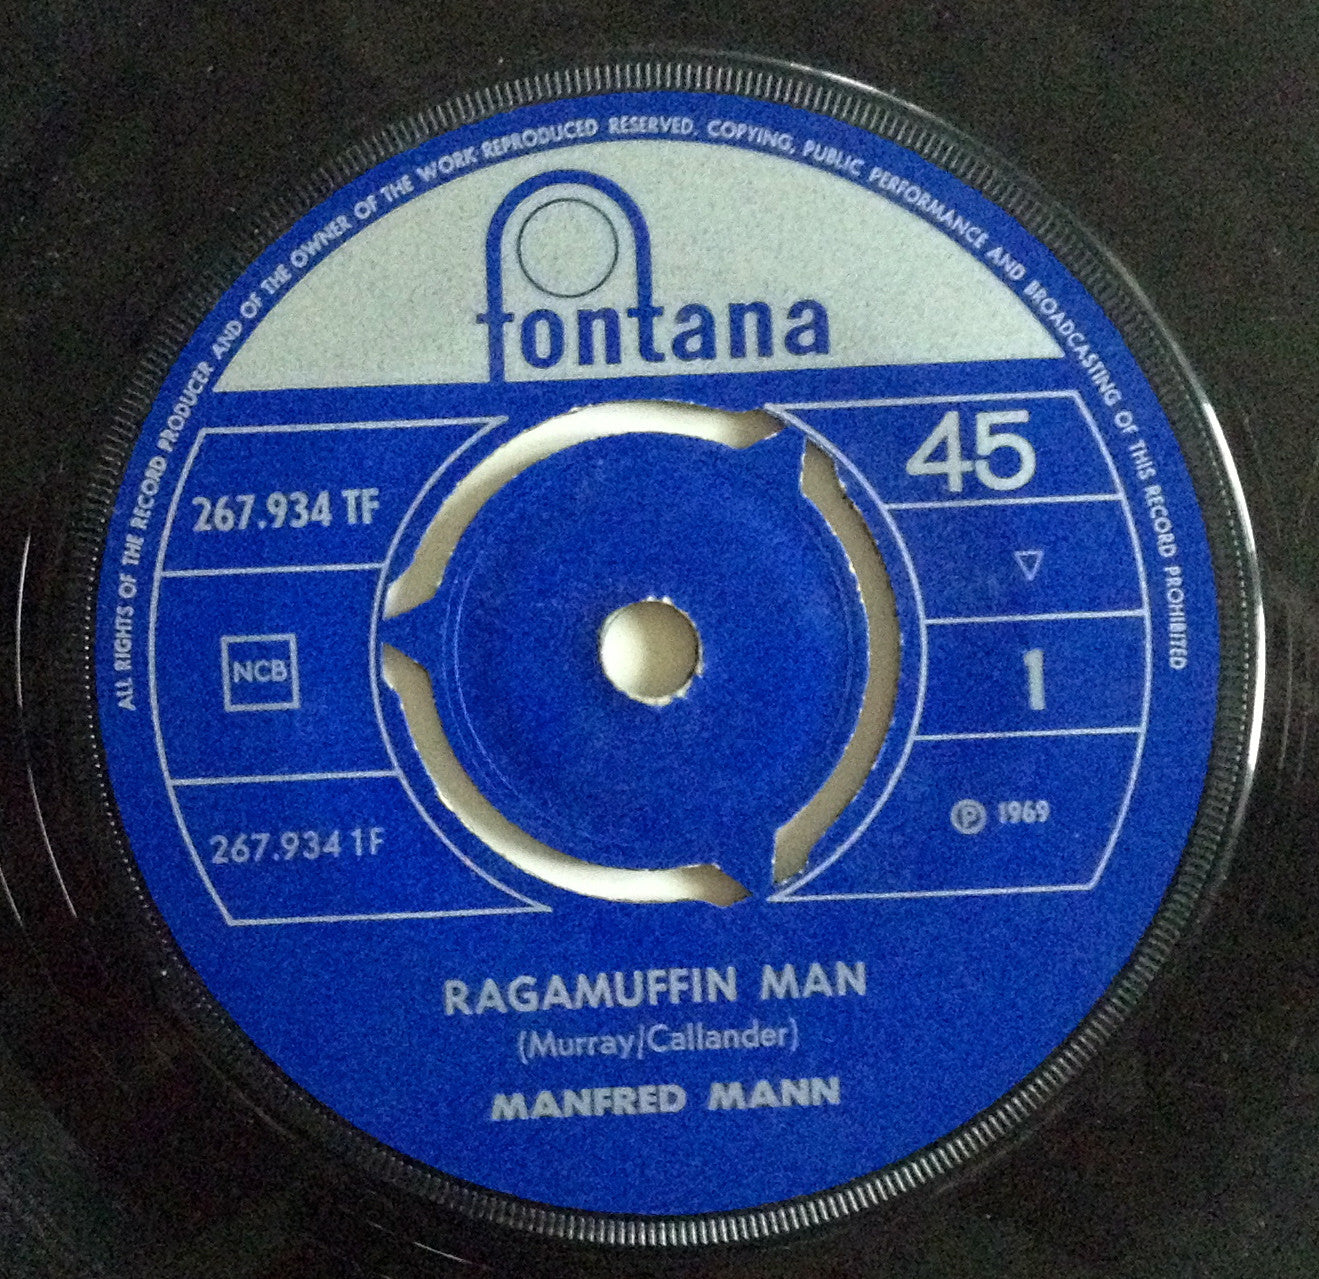 Manfred Mann - Ragamuffin Man.